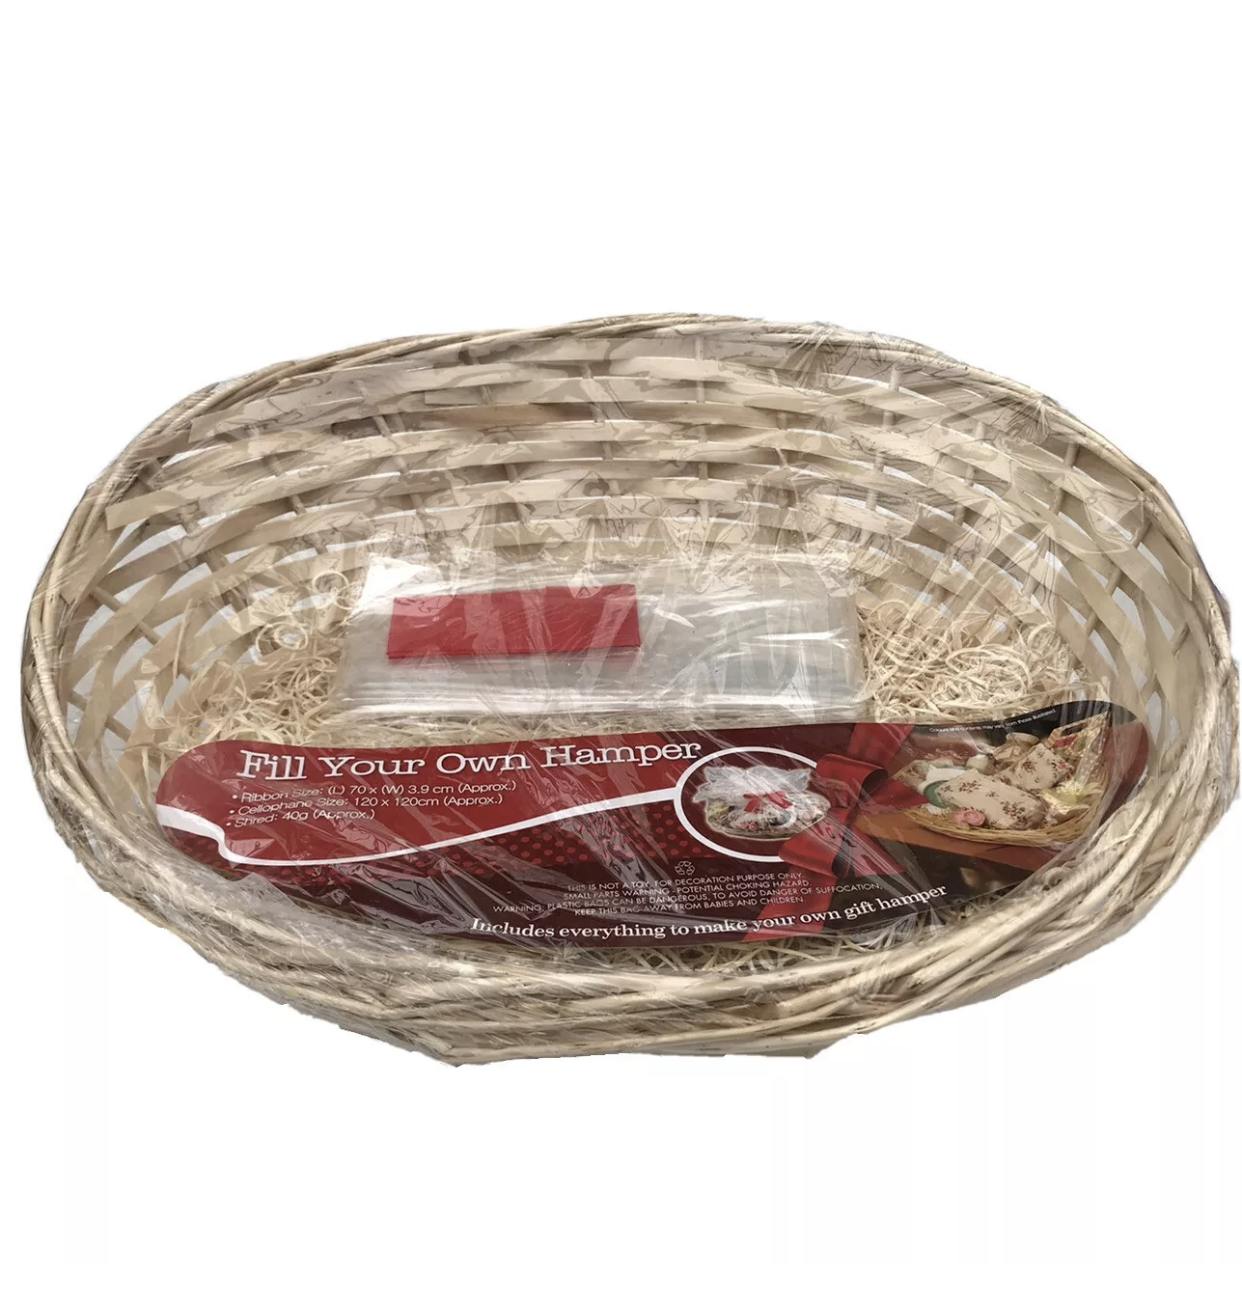 Oval Wicker Basket Gift Hamper Kit - Red - Sweet Victory Products Ltd